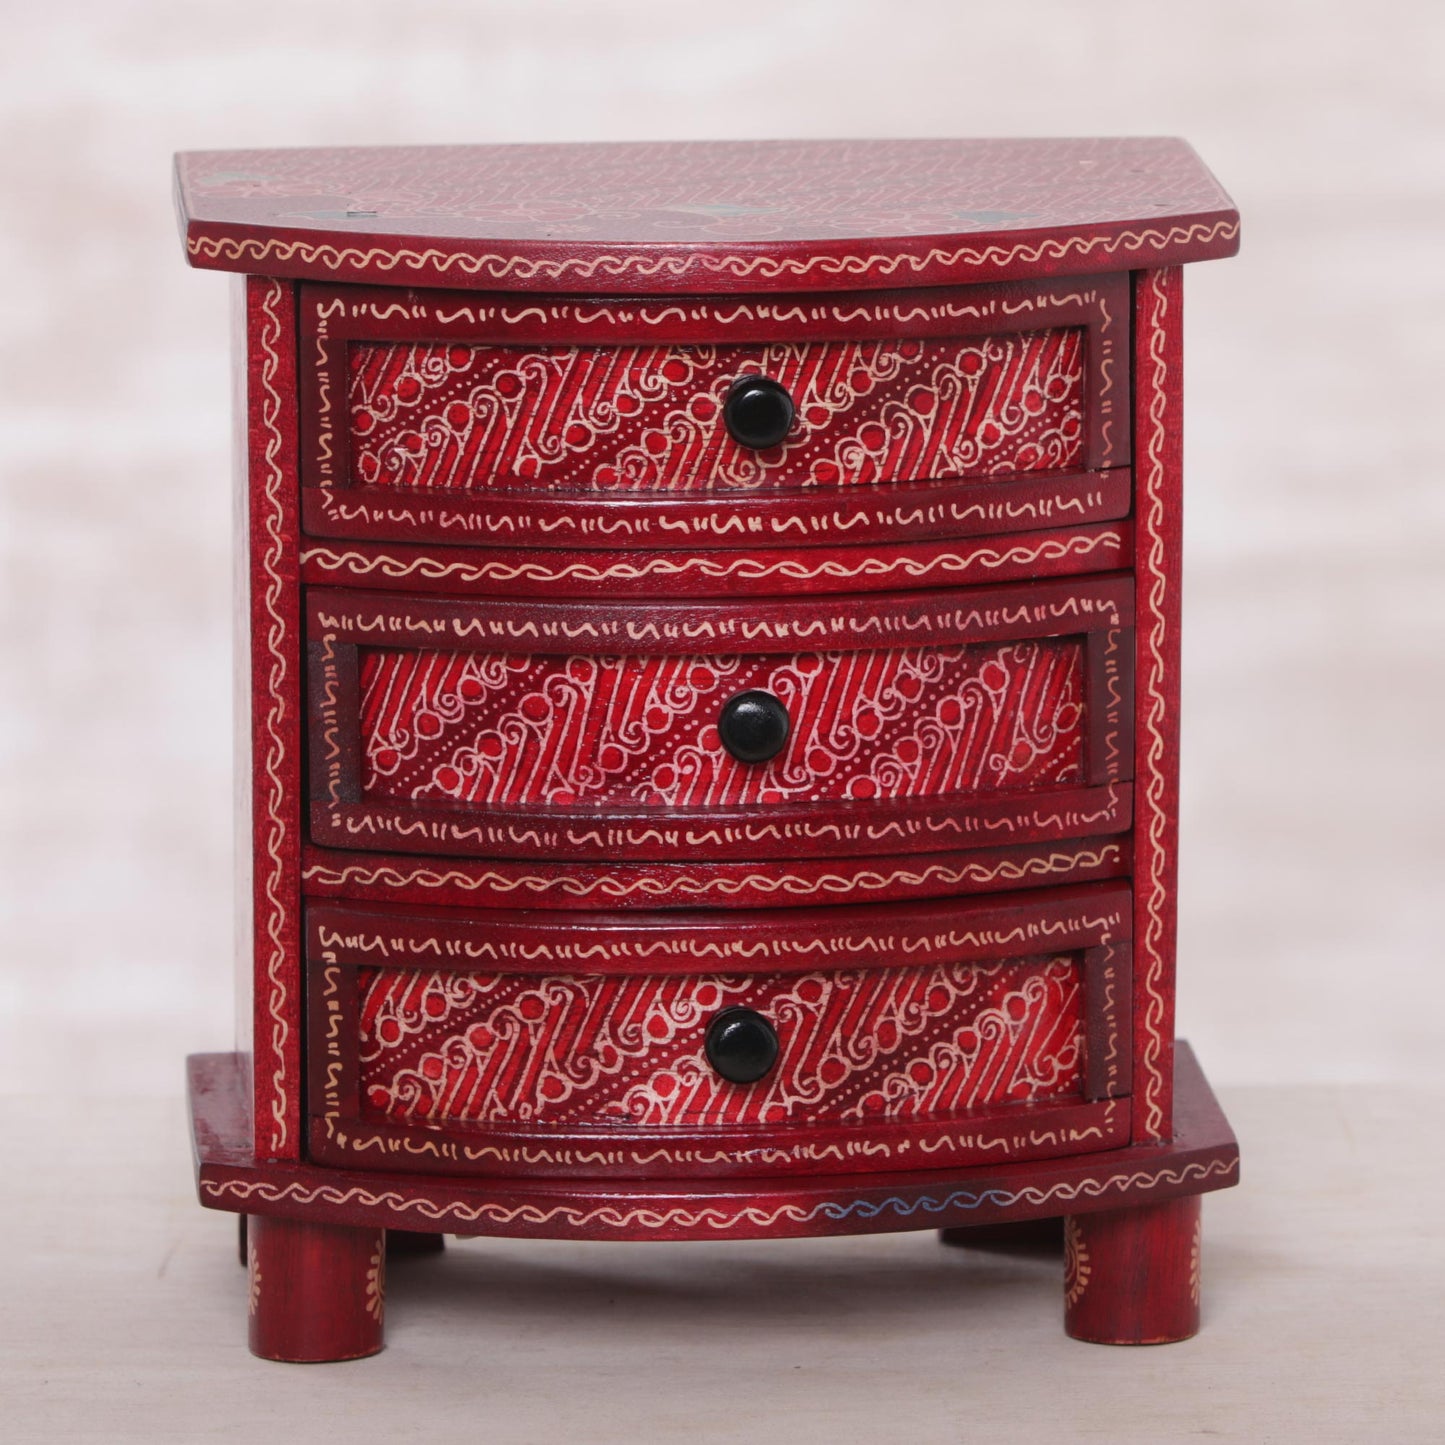 Scarlet Scrolls Red Parang Motif Handcrafted Wood Batik Jewelry Box